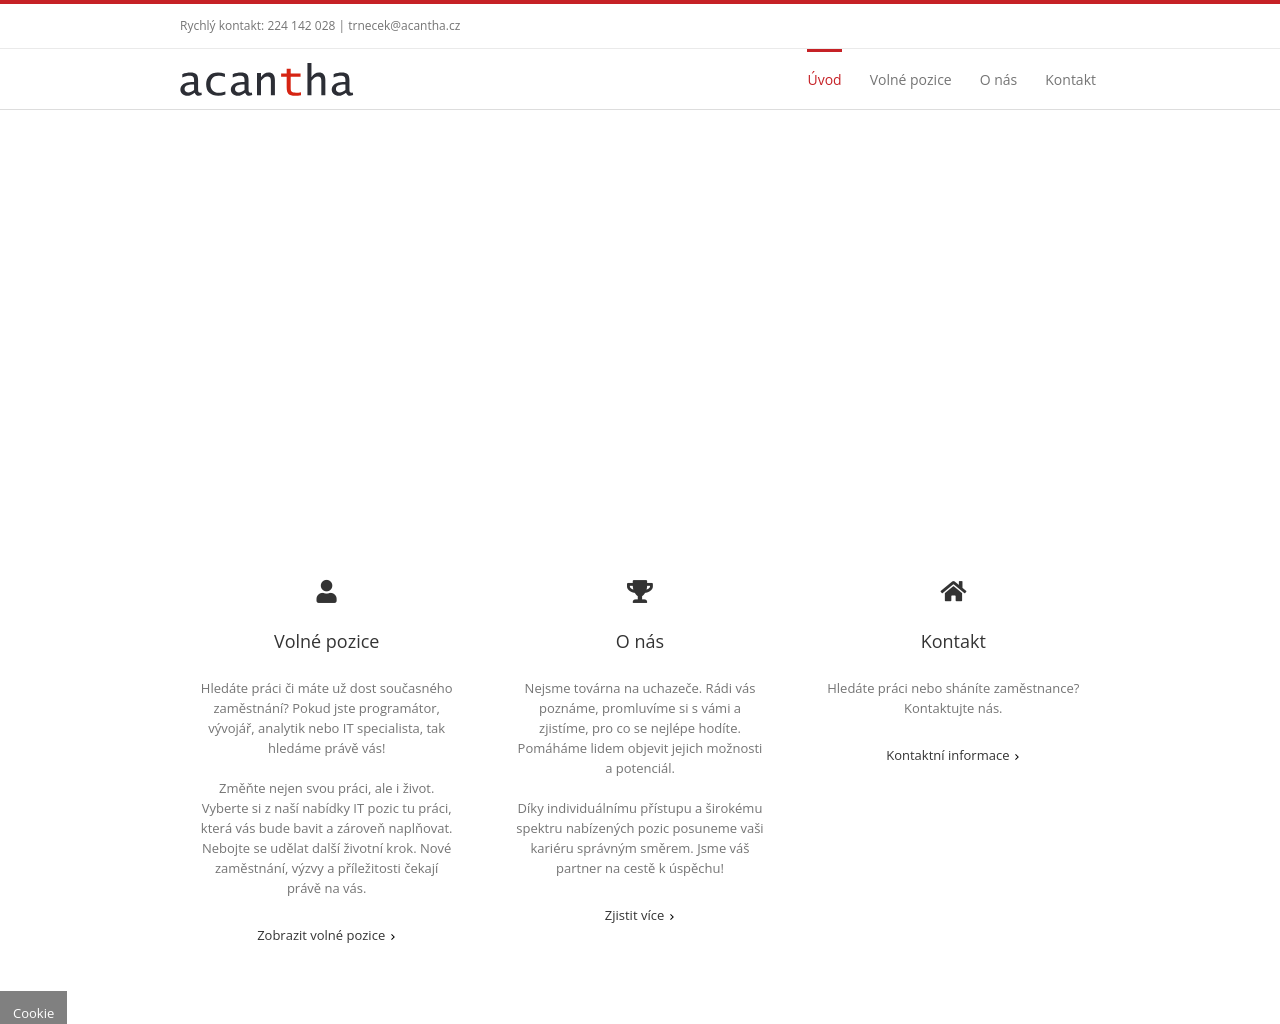 acantha.cz